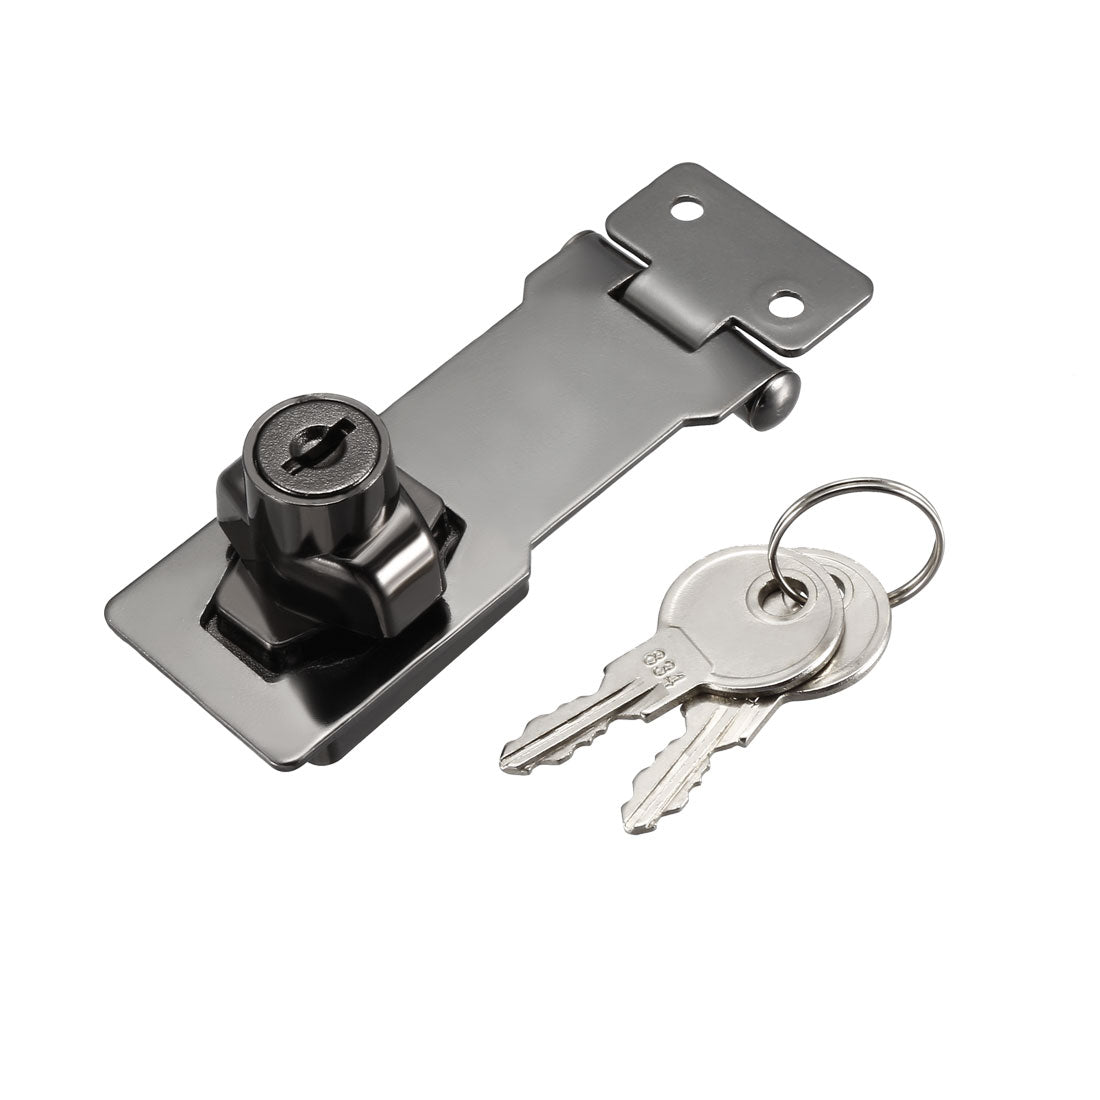 uxcell Uxcell Keyed Hasp Lock 94mm Twist Knob Keyed Locking Hasp for Door Cabinet Keyed Different Bright Black